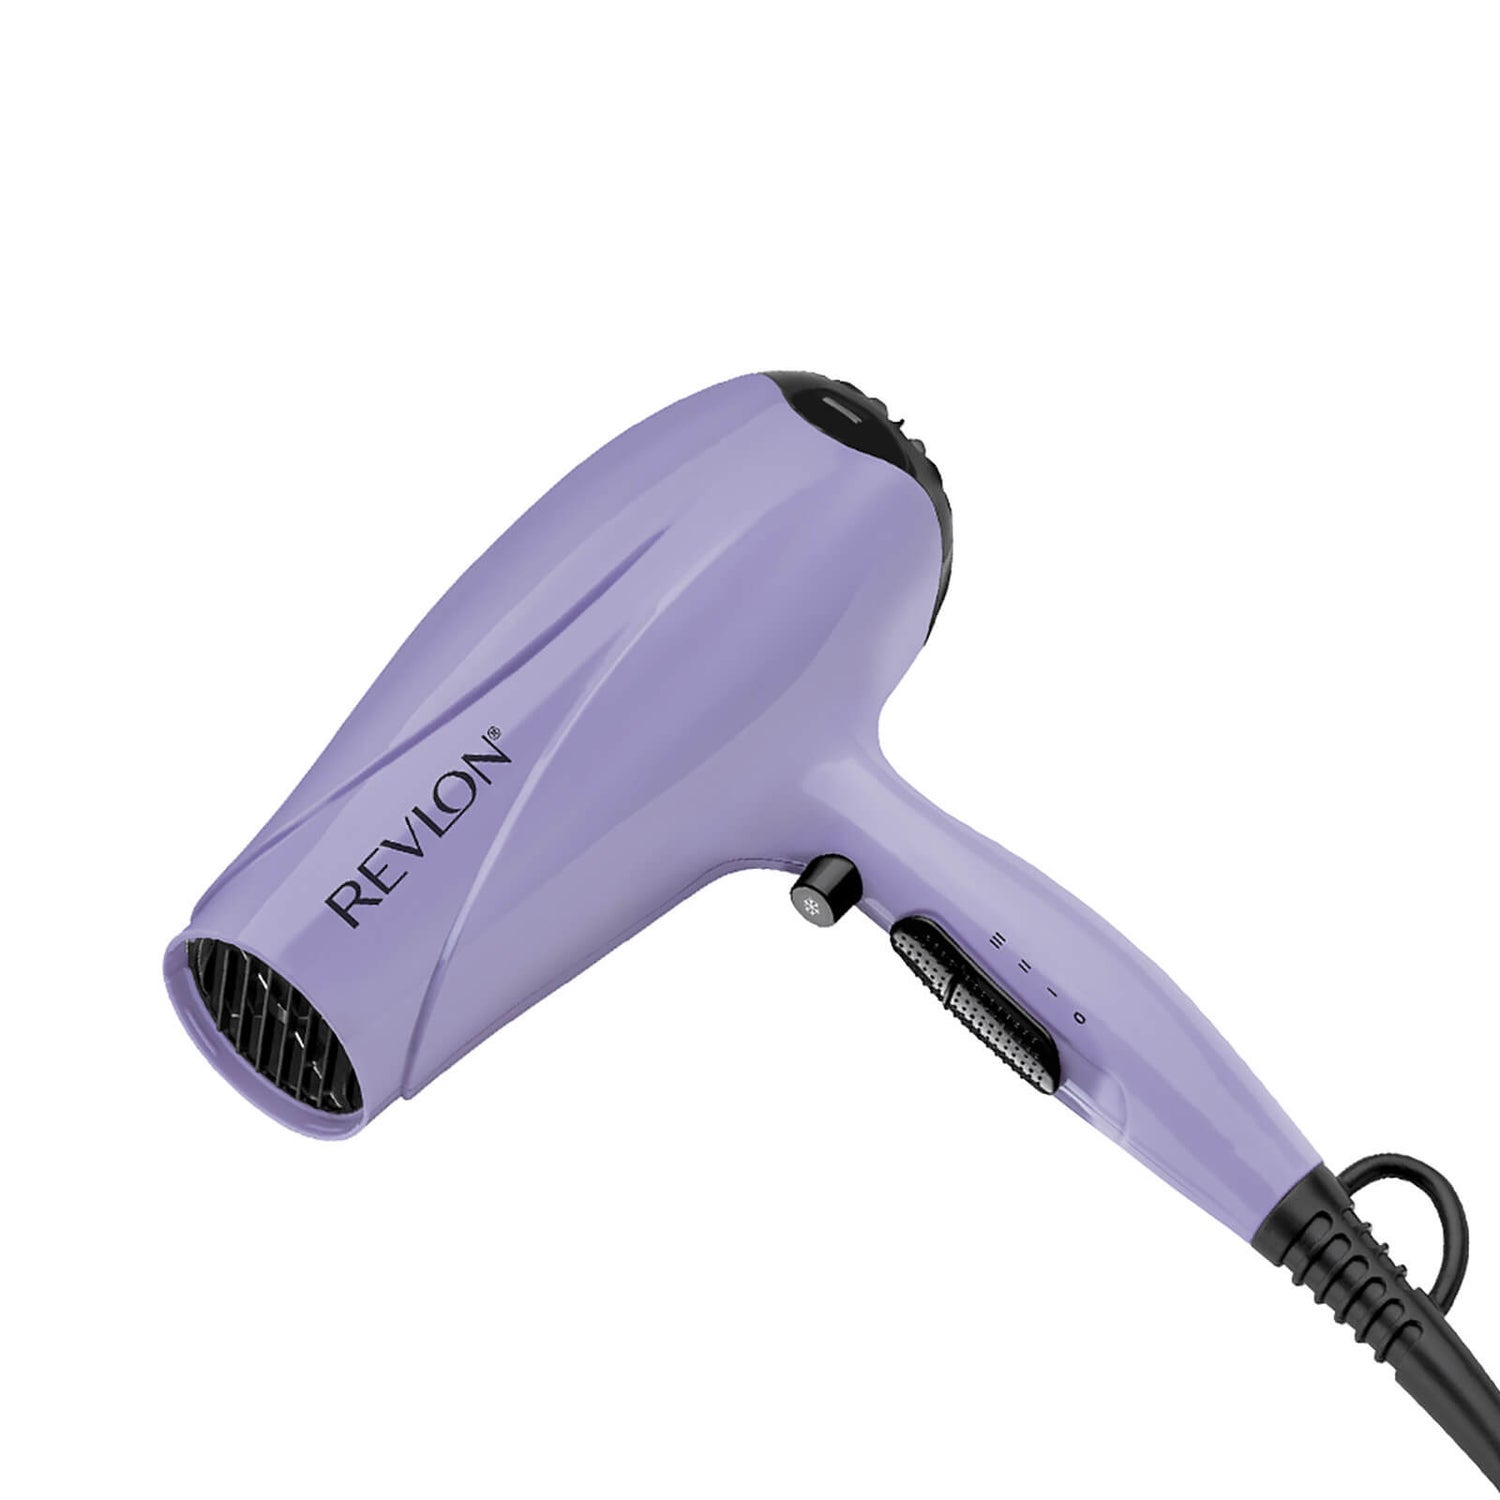 Discover Revlon's Ultra Quick Hair Dryer | Revlon Hair Tools